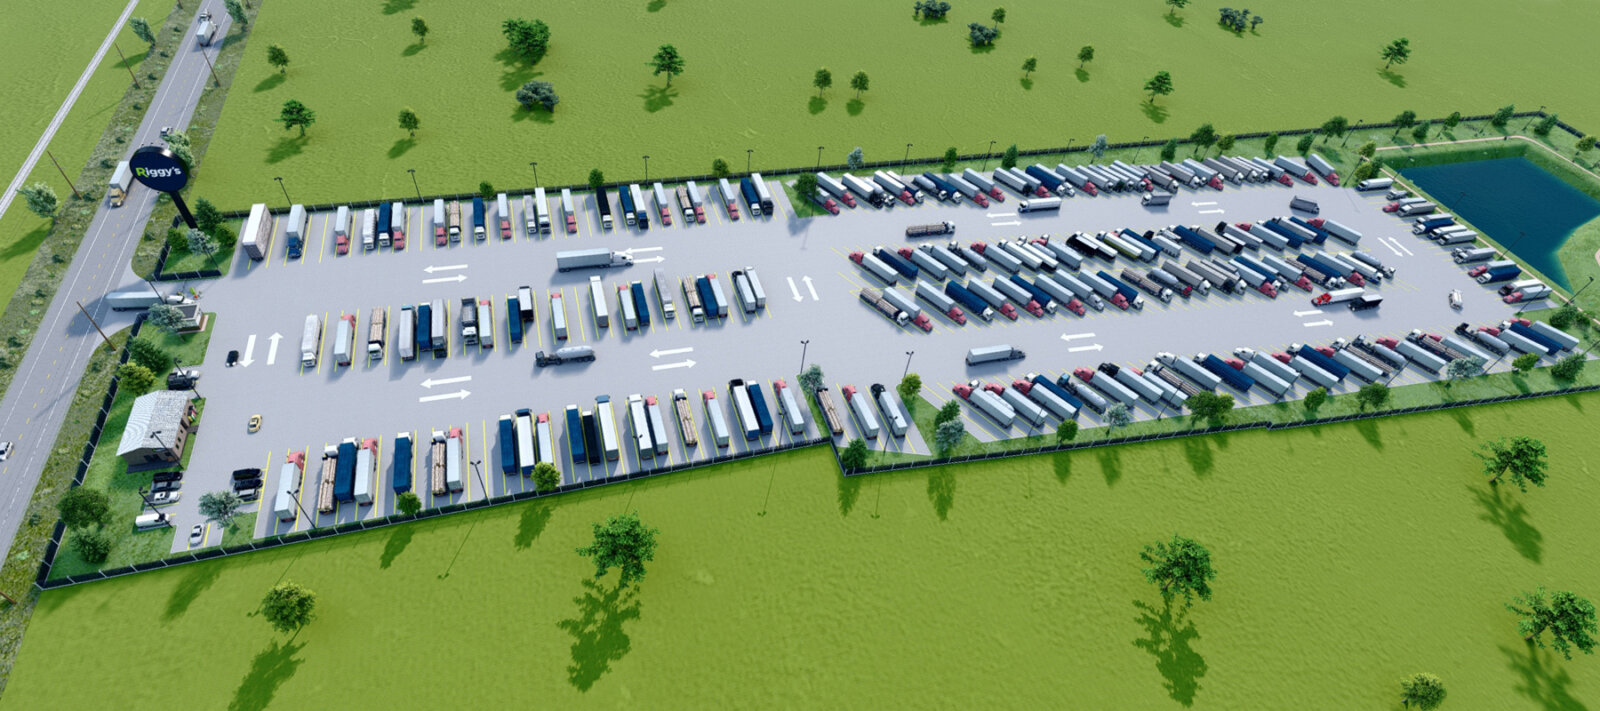 riggys parking lot